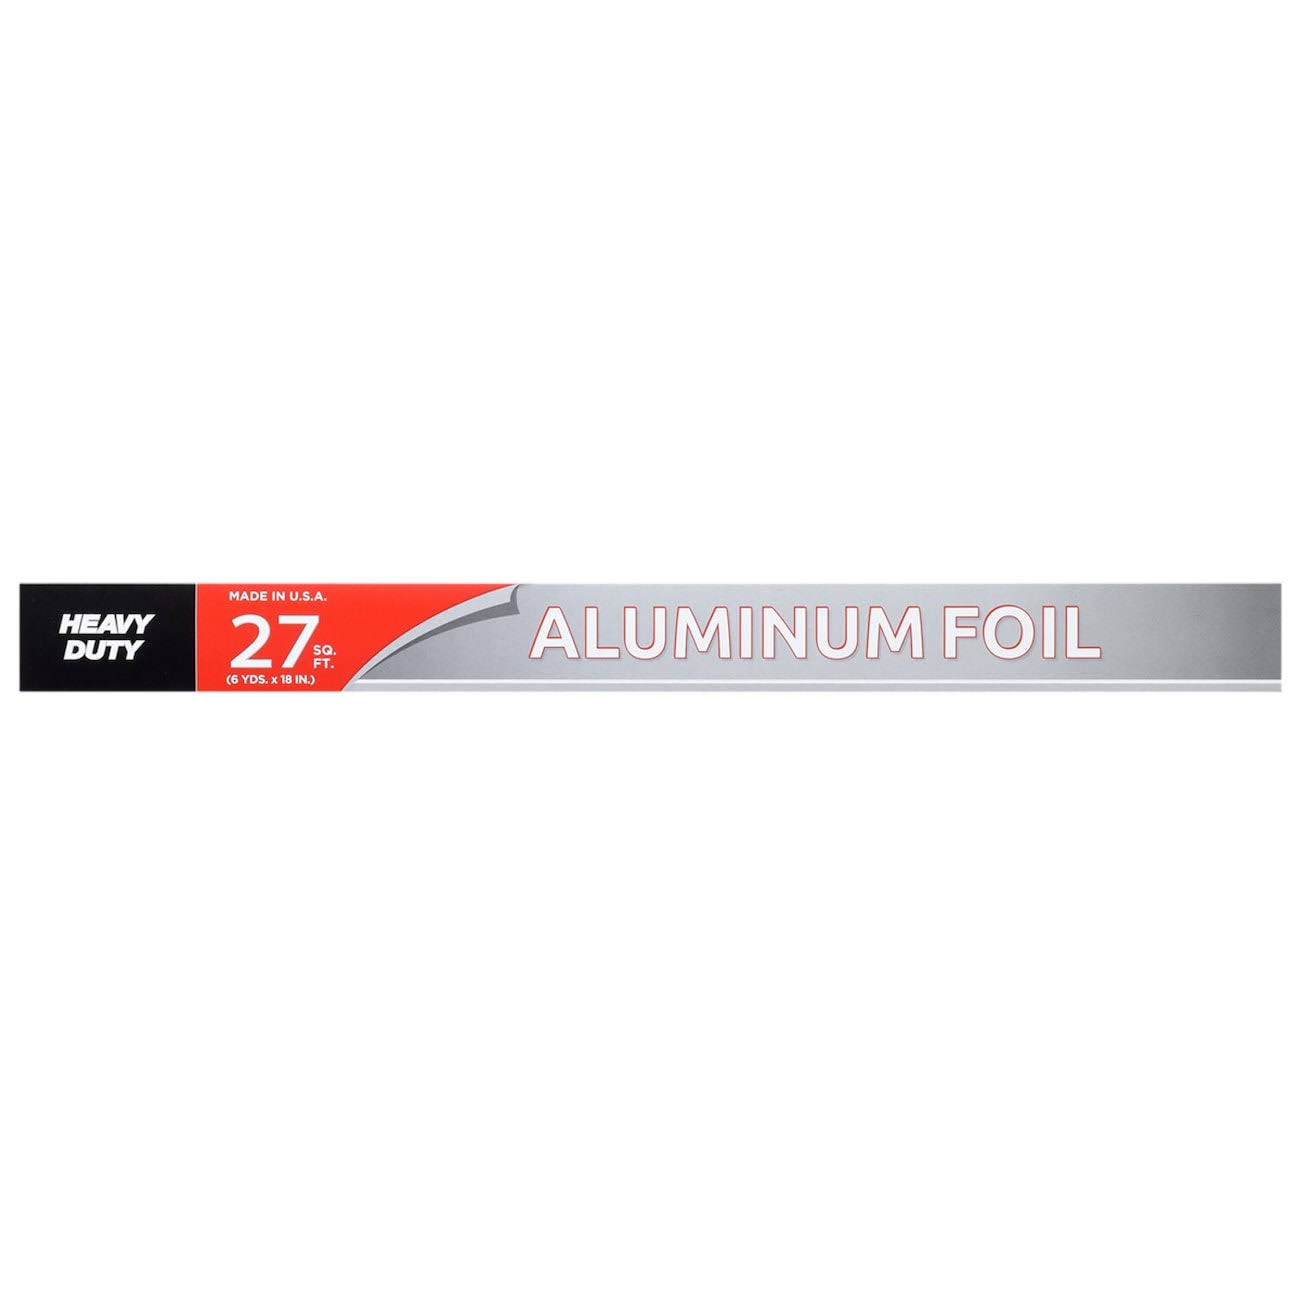 UltraFoil Heavy Duty Aluminum Foil Roll - 27 ft